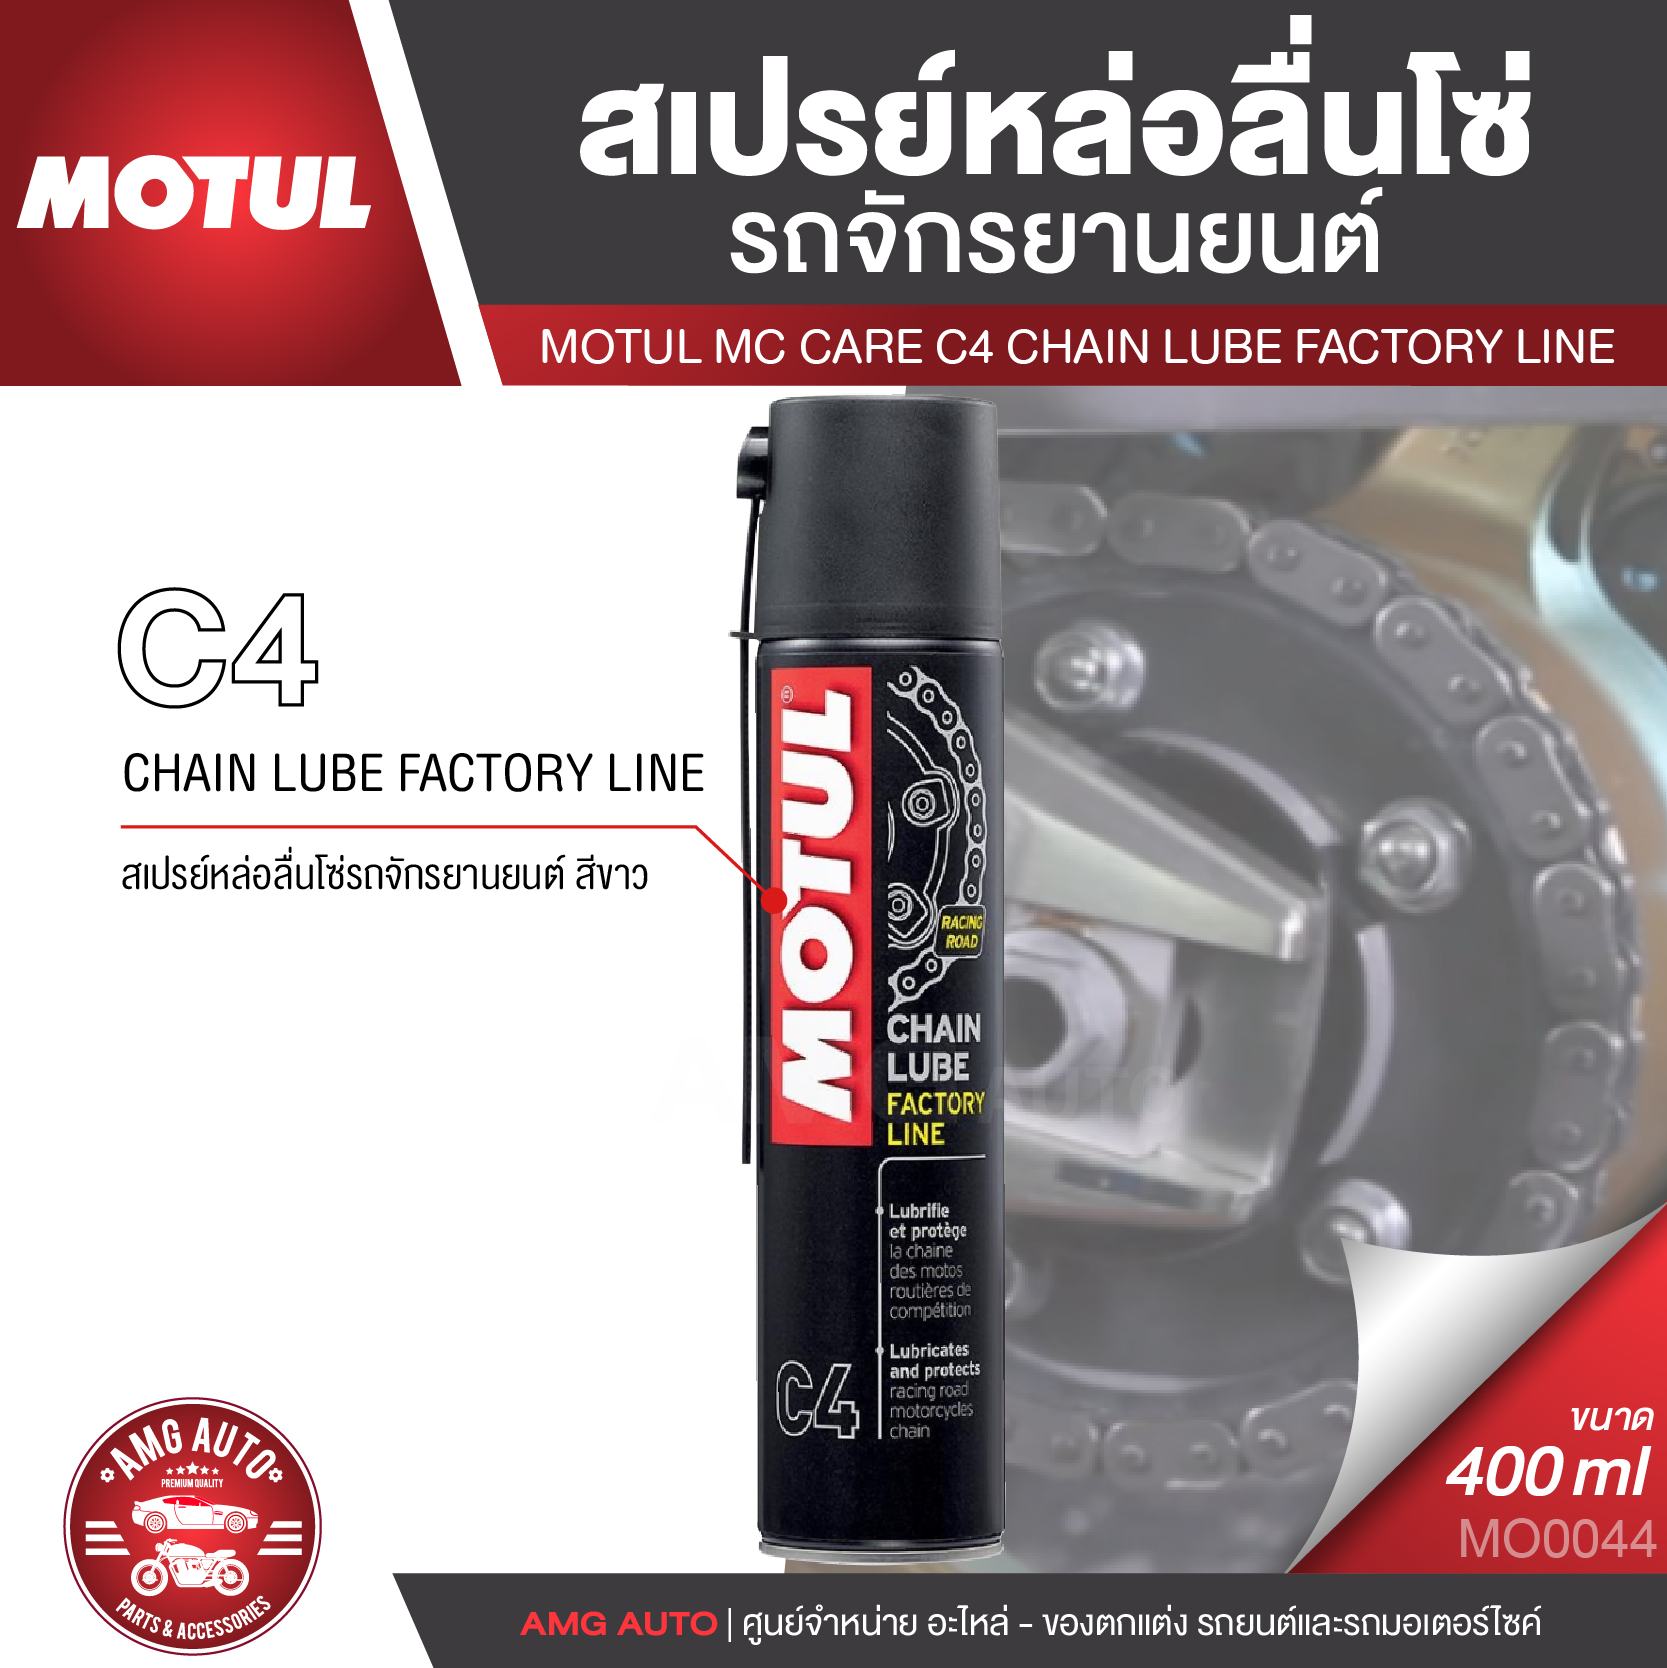 MOTUL MC CARE™ C4 CHAIN LUBE FACTORY LINE ขนาด 400 ML. สเปรย์หล่อลื่นโซ่รถจักรยานยนต์ สีขาว เหนียว สาร AE/EP โซ่ ล้างโซ่ หล่อลื่นโซ่ MO0044